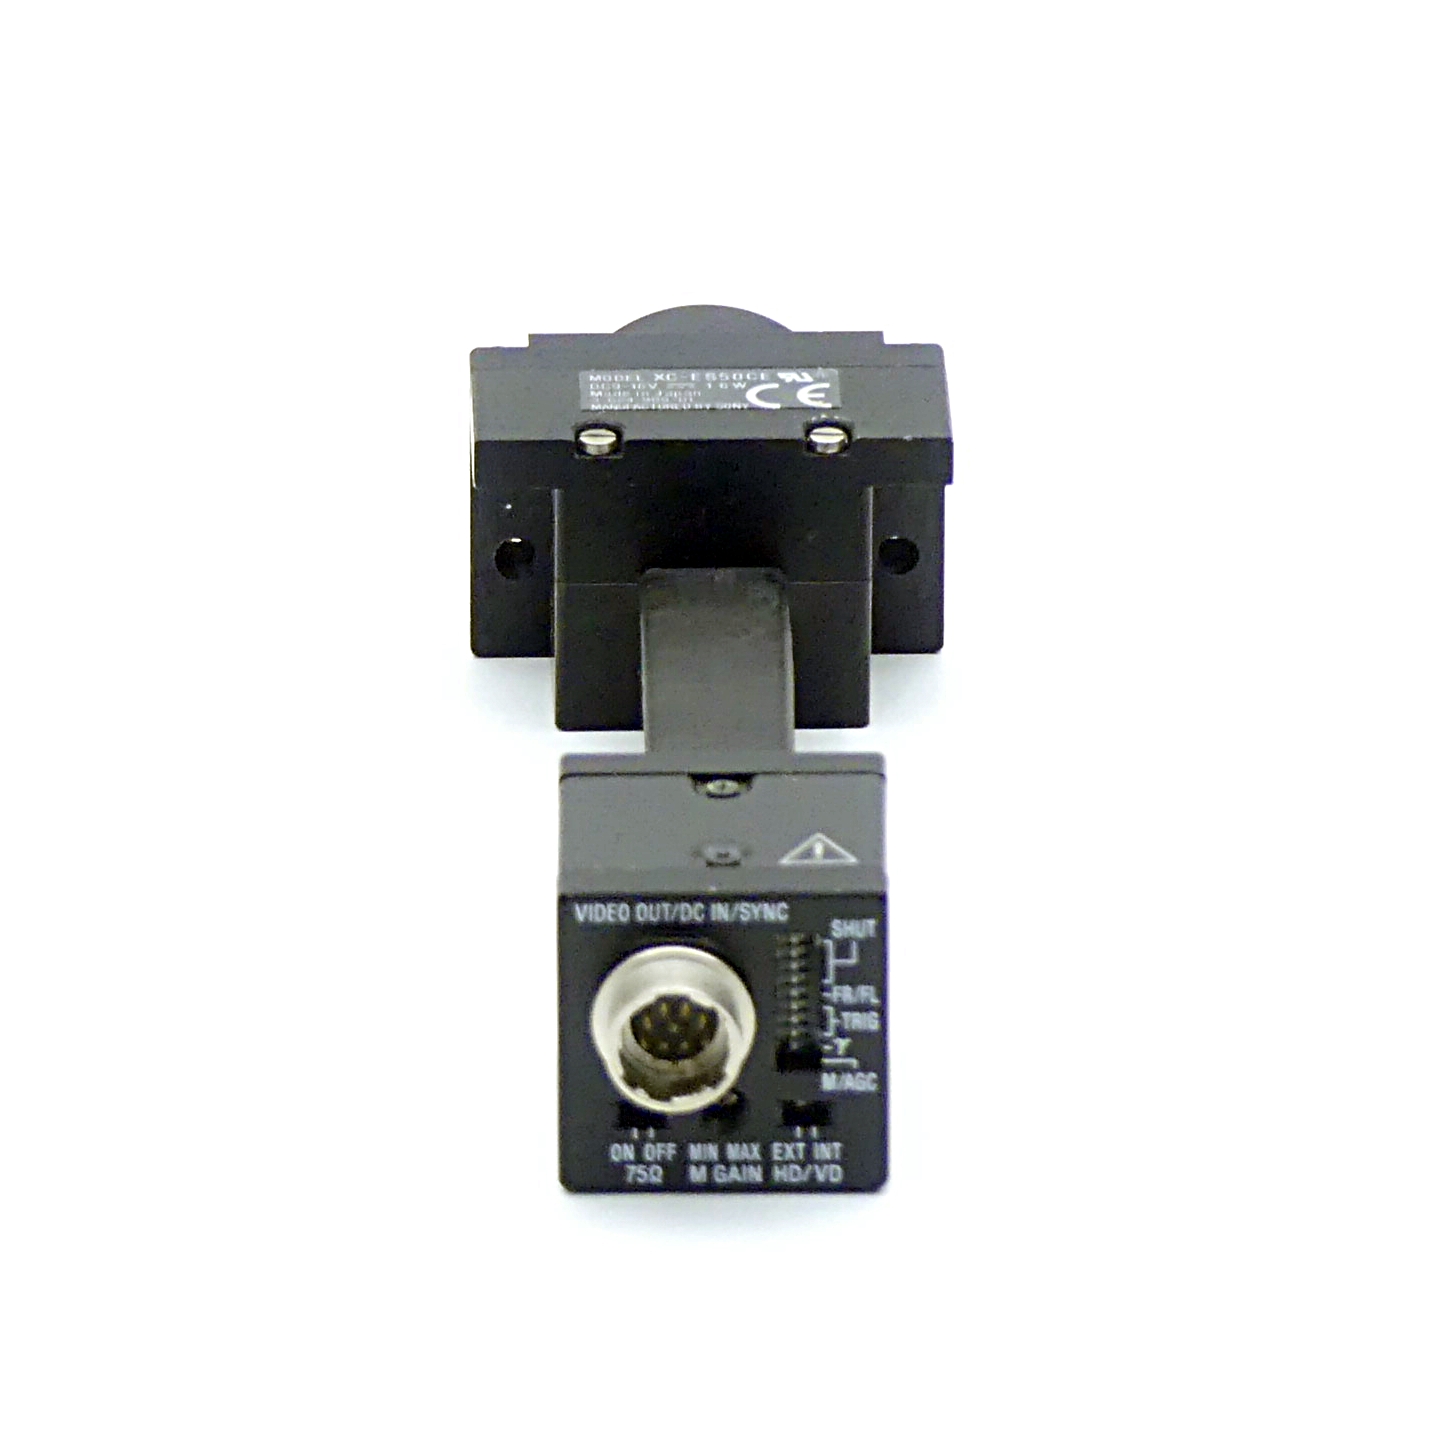 Industrial Camera XC-ES50CE with CCD XC-ES50 